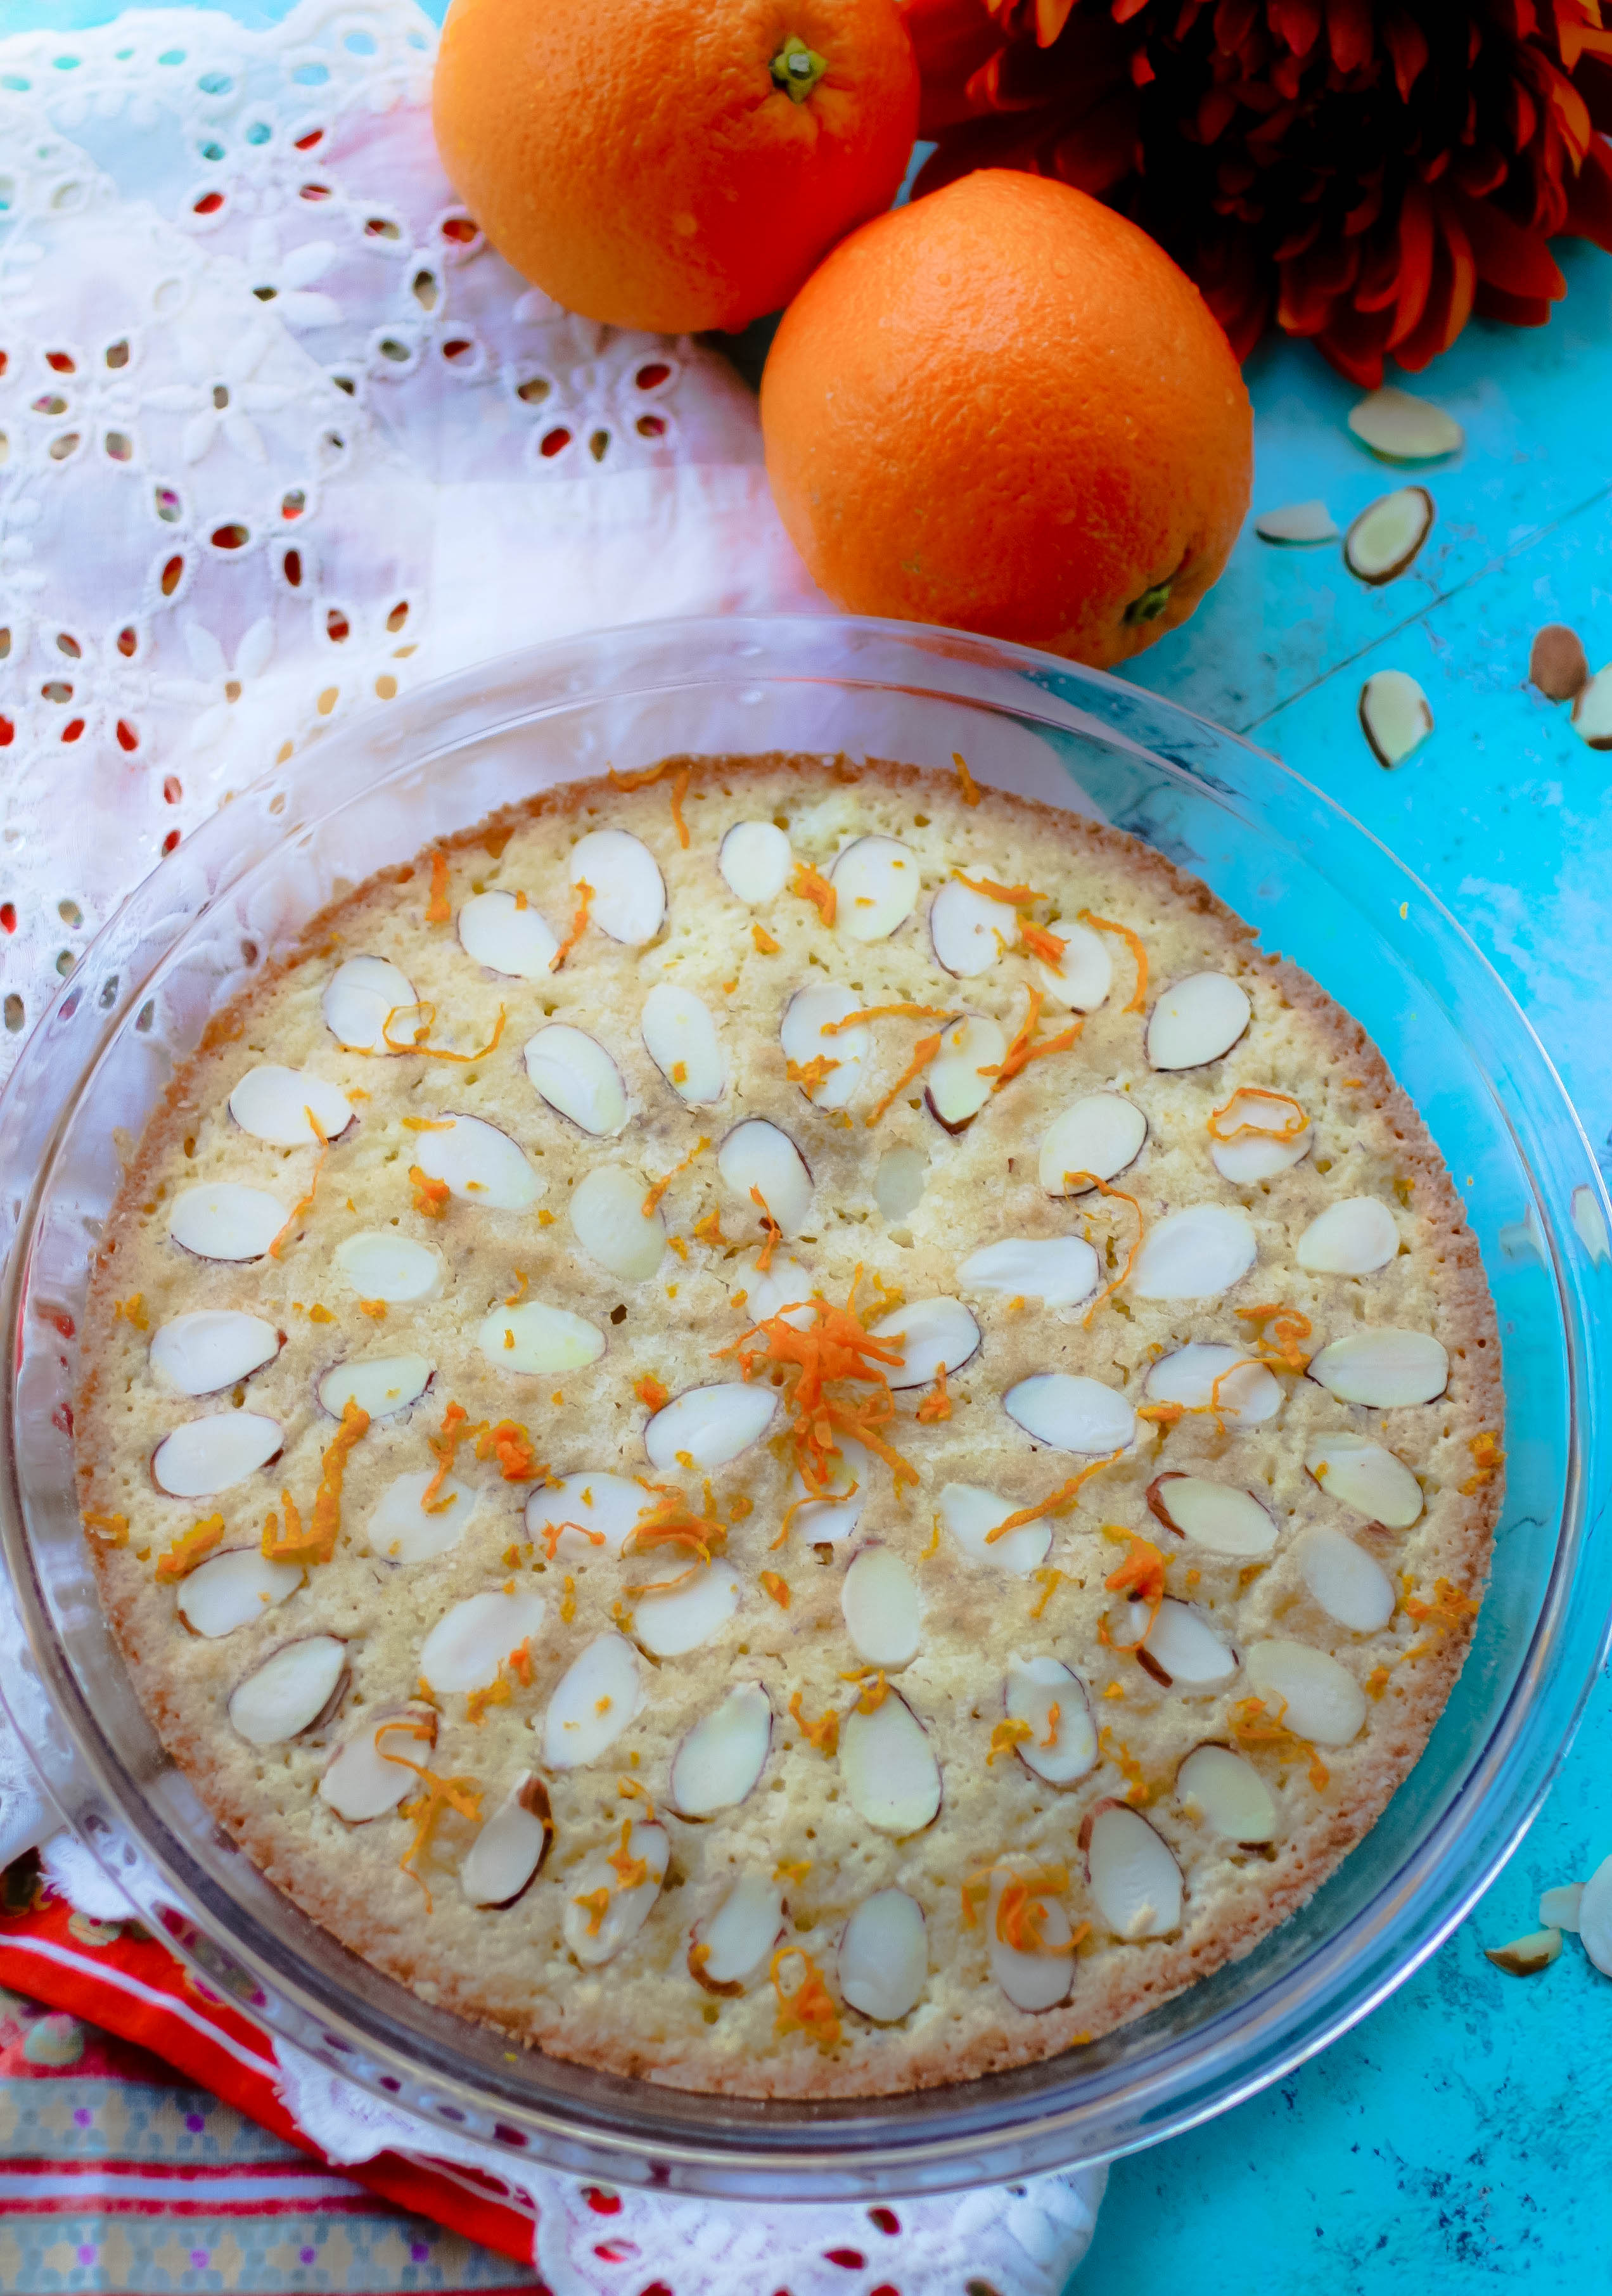 Almond-Orange Sunshine Cake is so easy to make as a tasty treat. You'll enjoy this Almond-Orange Sunshine Cake, for sure!